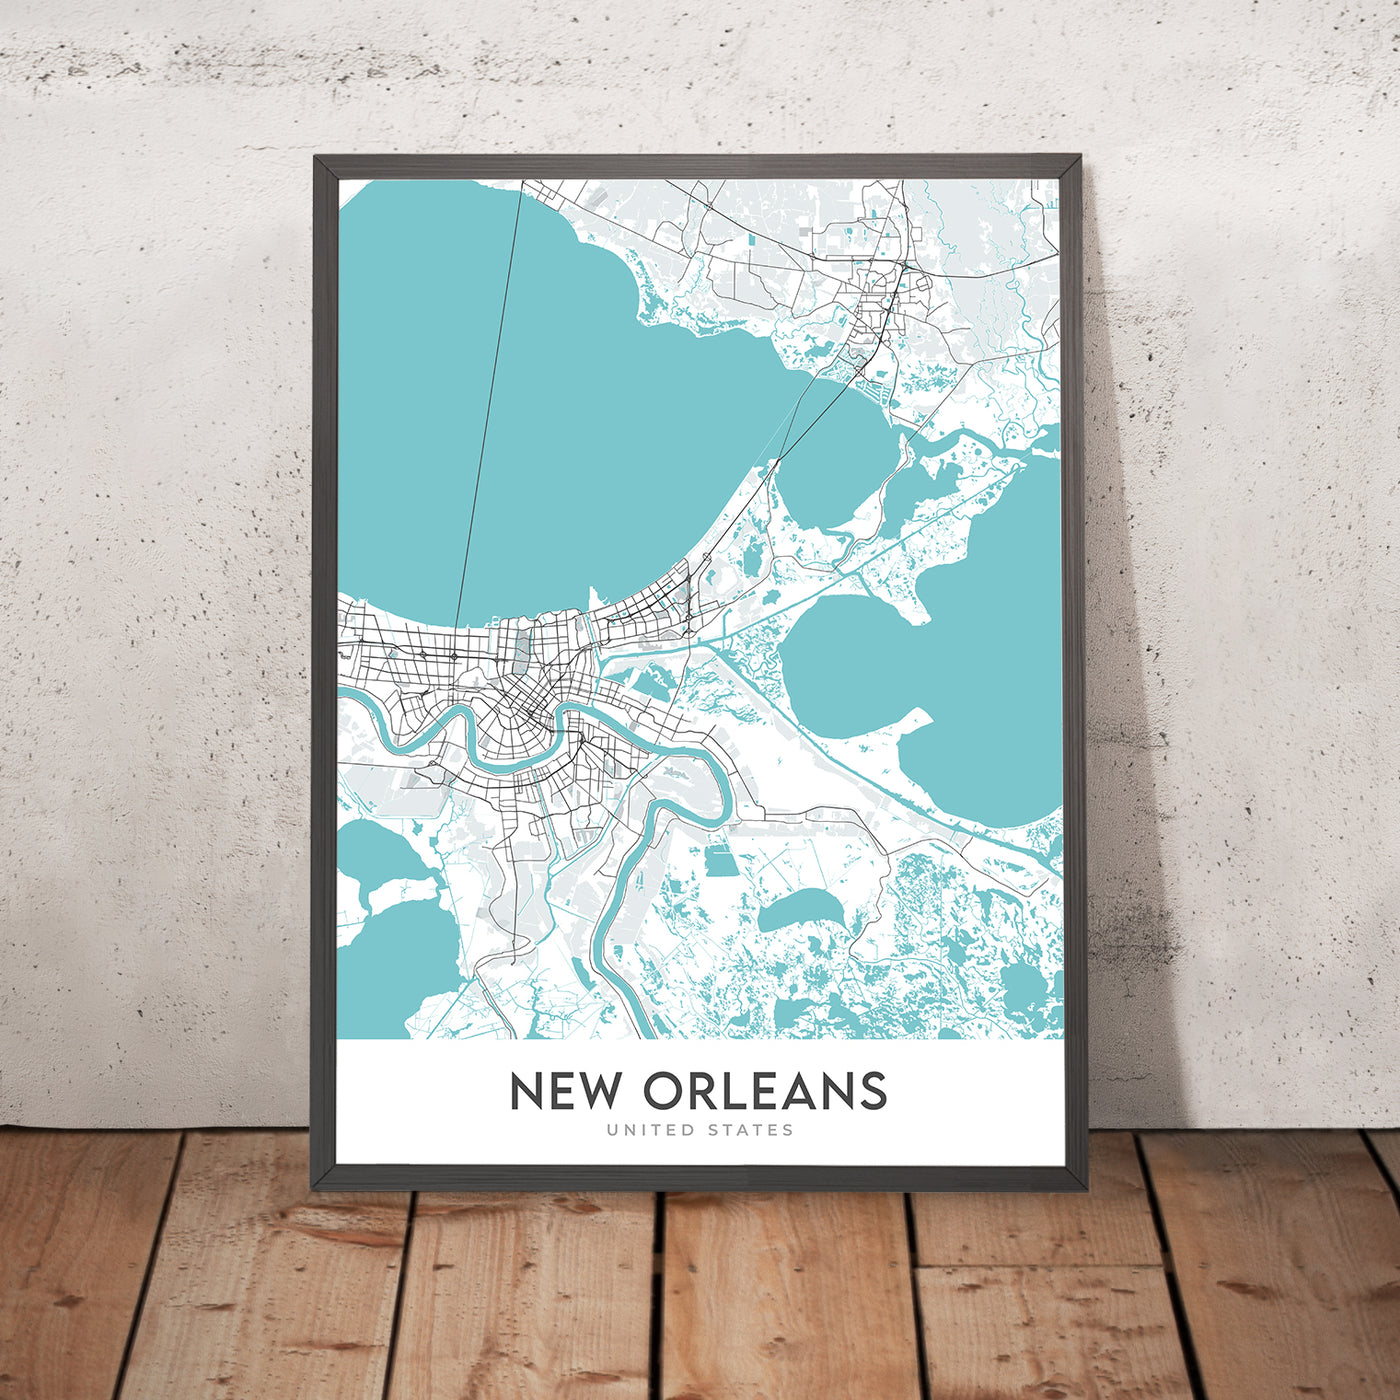 Modern City Map of New Orleans, LA: French Quarter, Garden District, Audubon Park, St. Charles Ave, Magazine St